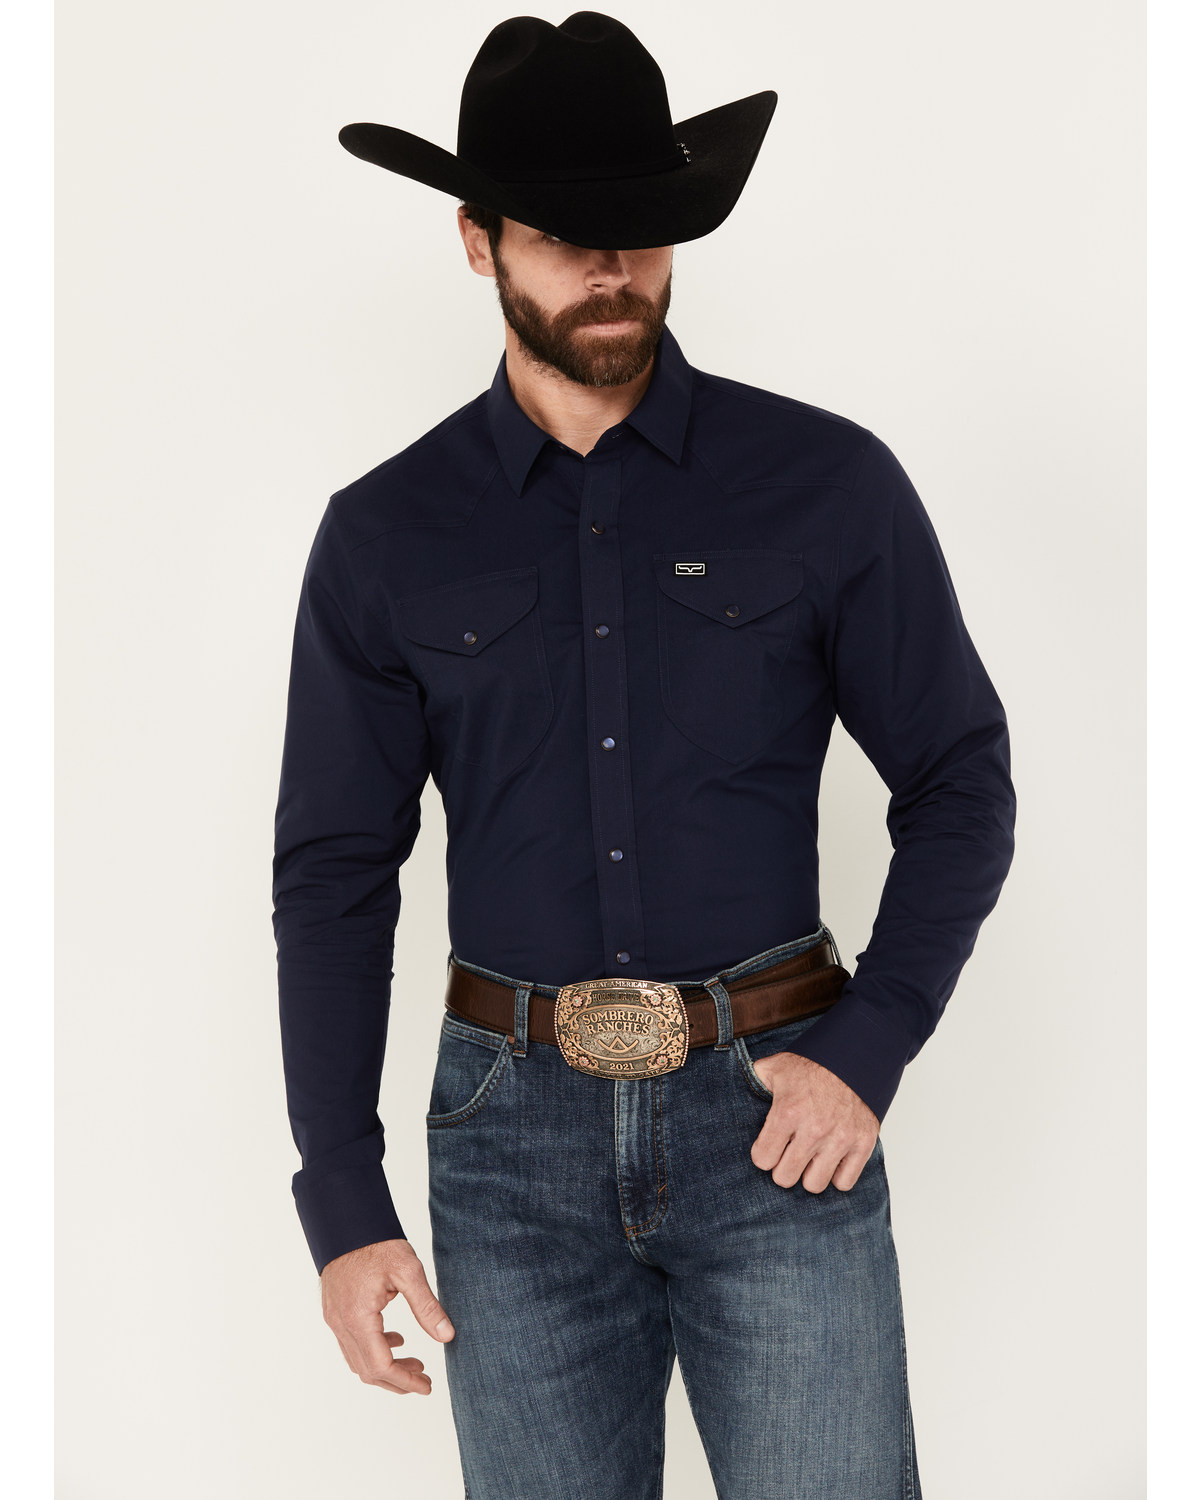 Kimes Ranch Men's Blackout Long Sleeve Snap Western Shirt